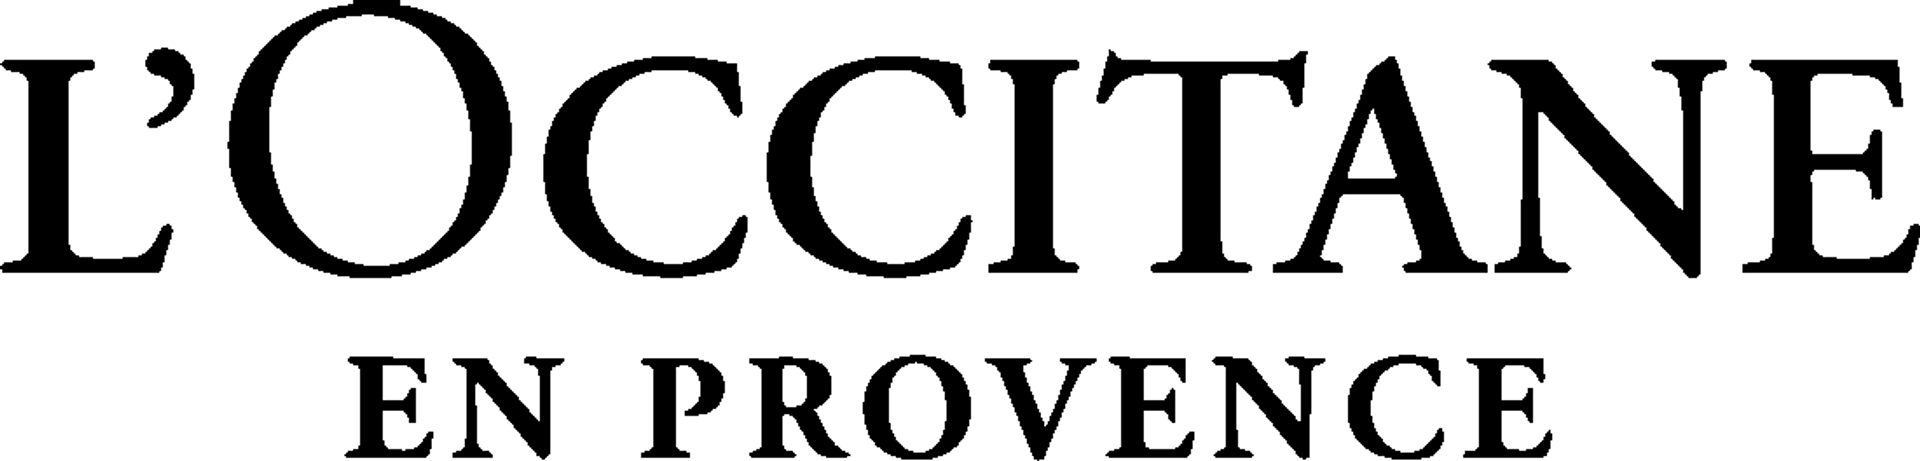 L'OCCITANE EN PROVENCE logo